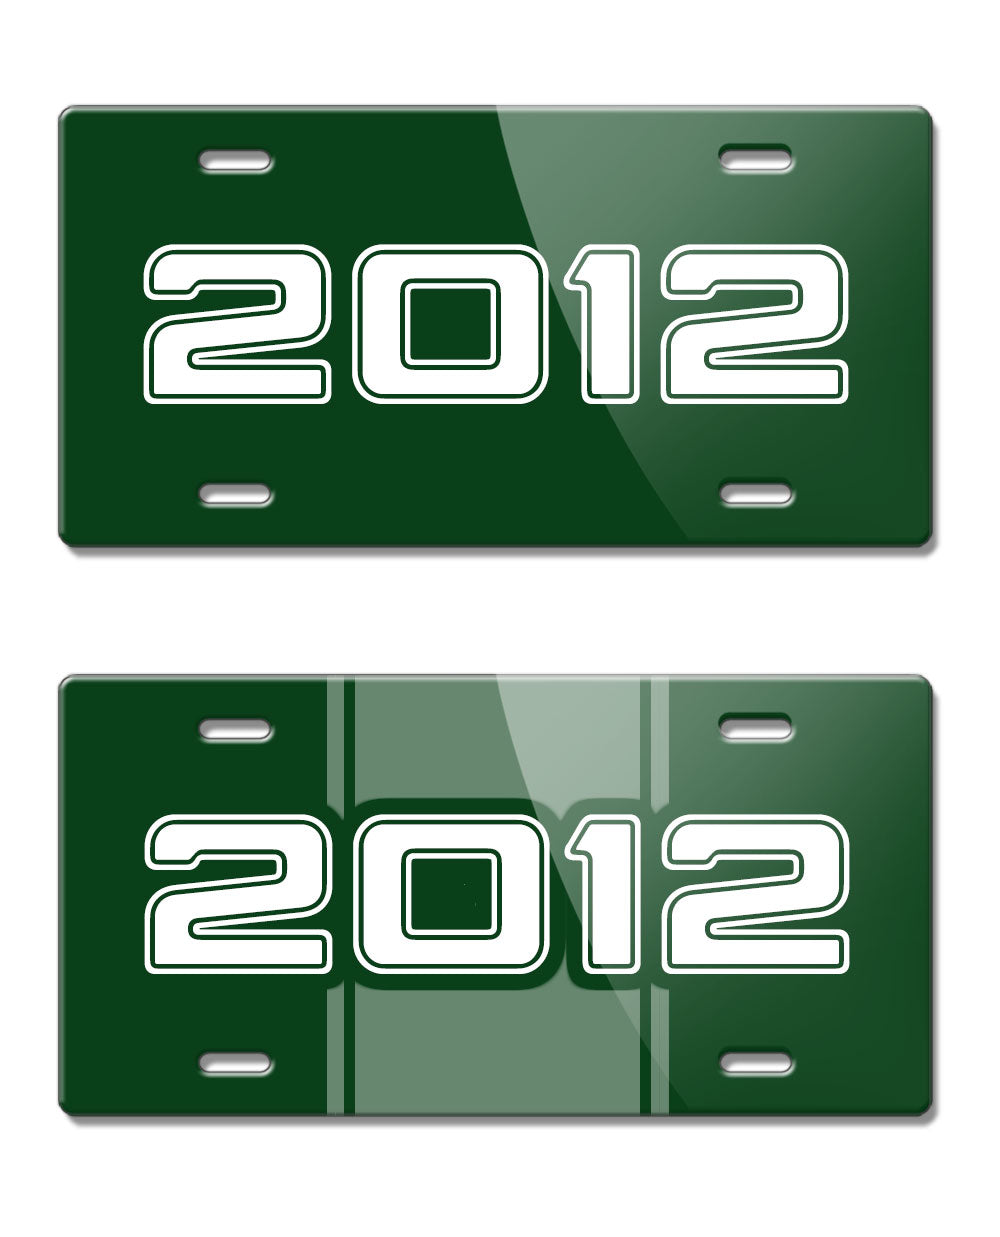 2012 Customizable - License Plate